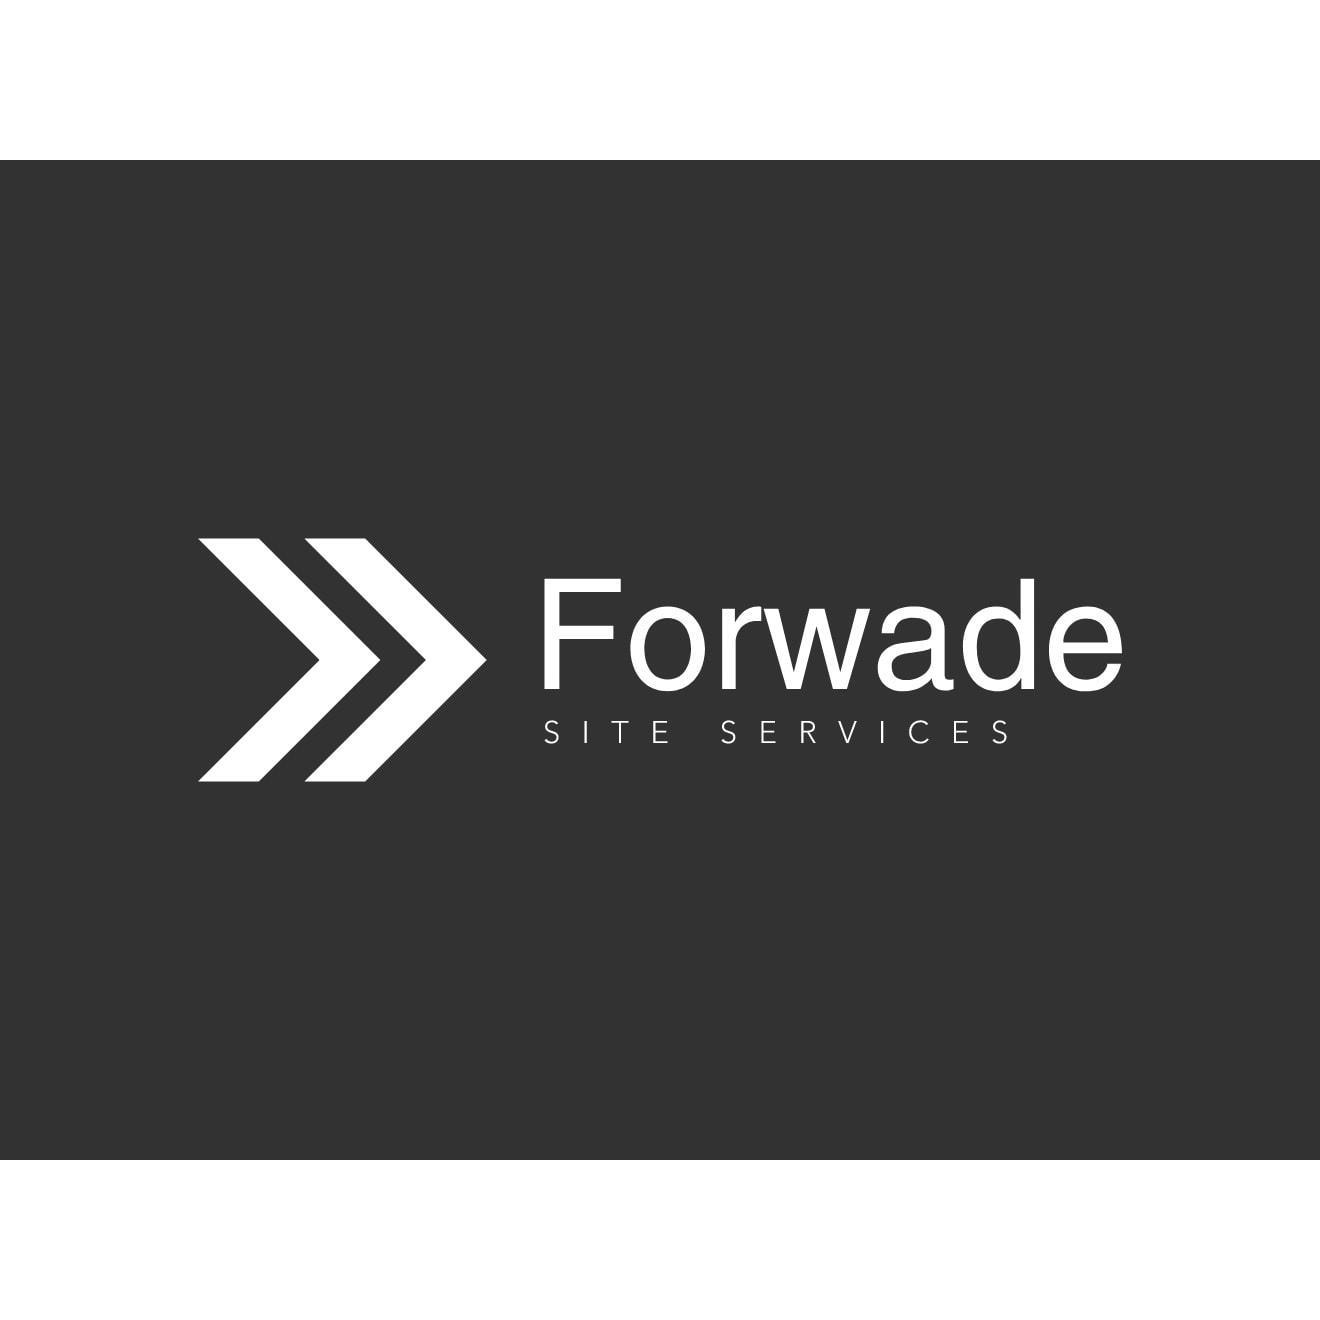 Forwade Site Services Ltd - Leeds, West Yorkshire LS4 2AL - 07950 602788 | ShowMeLocal.com